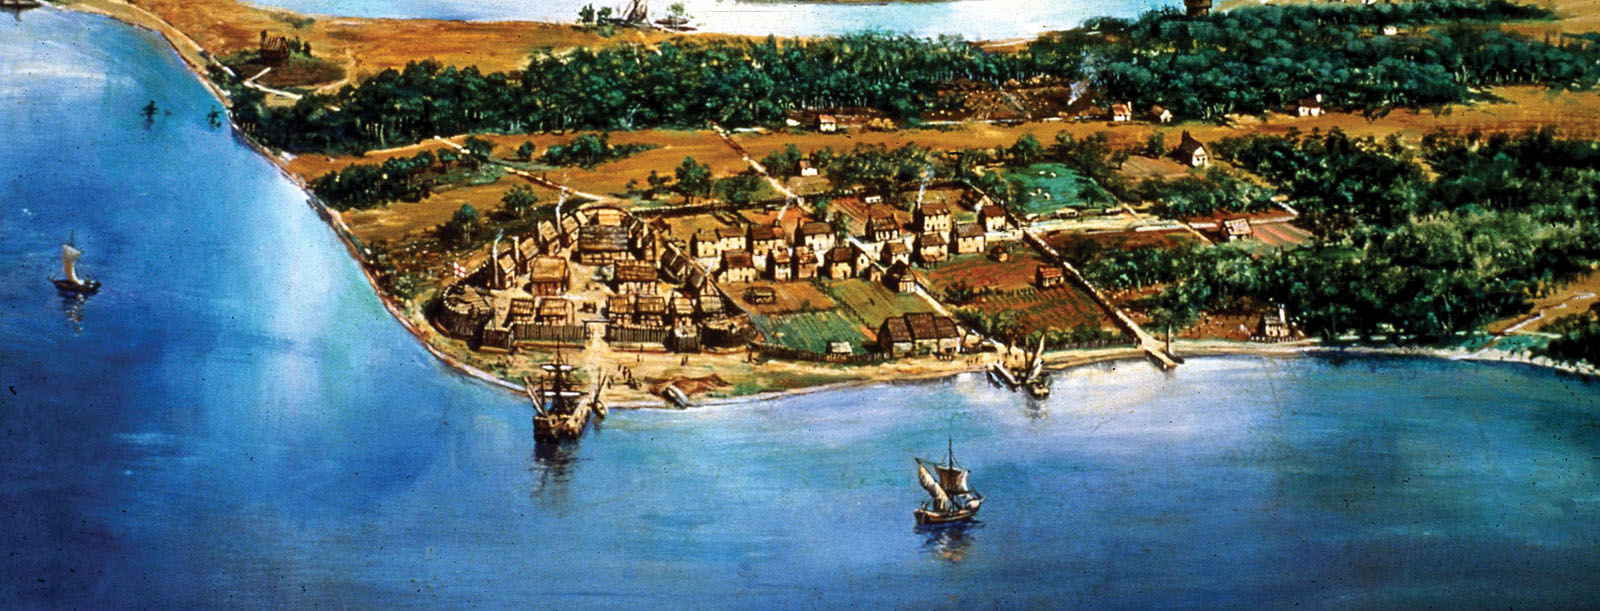 Jamestowne Ancestors, 1607-1699